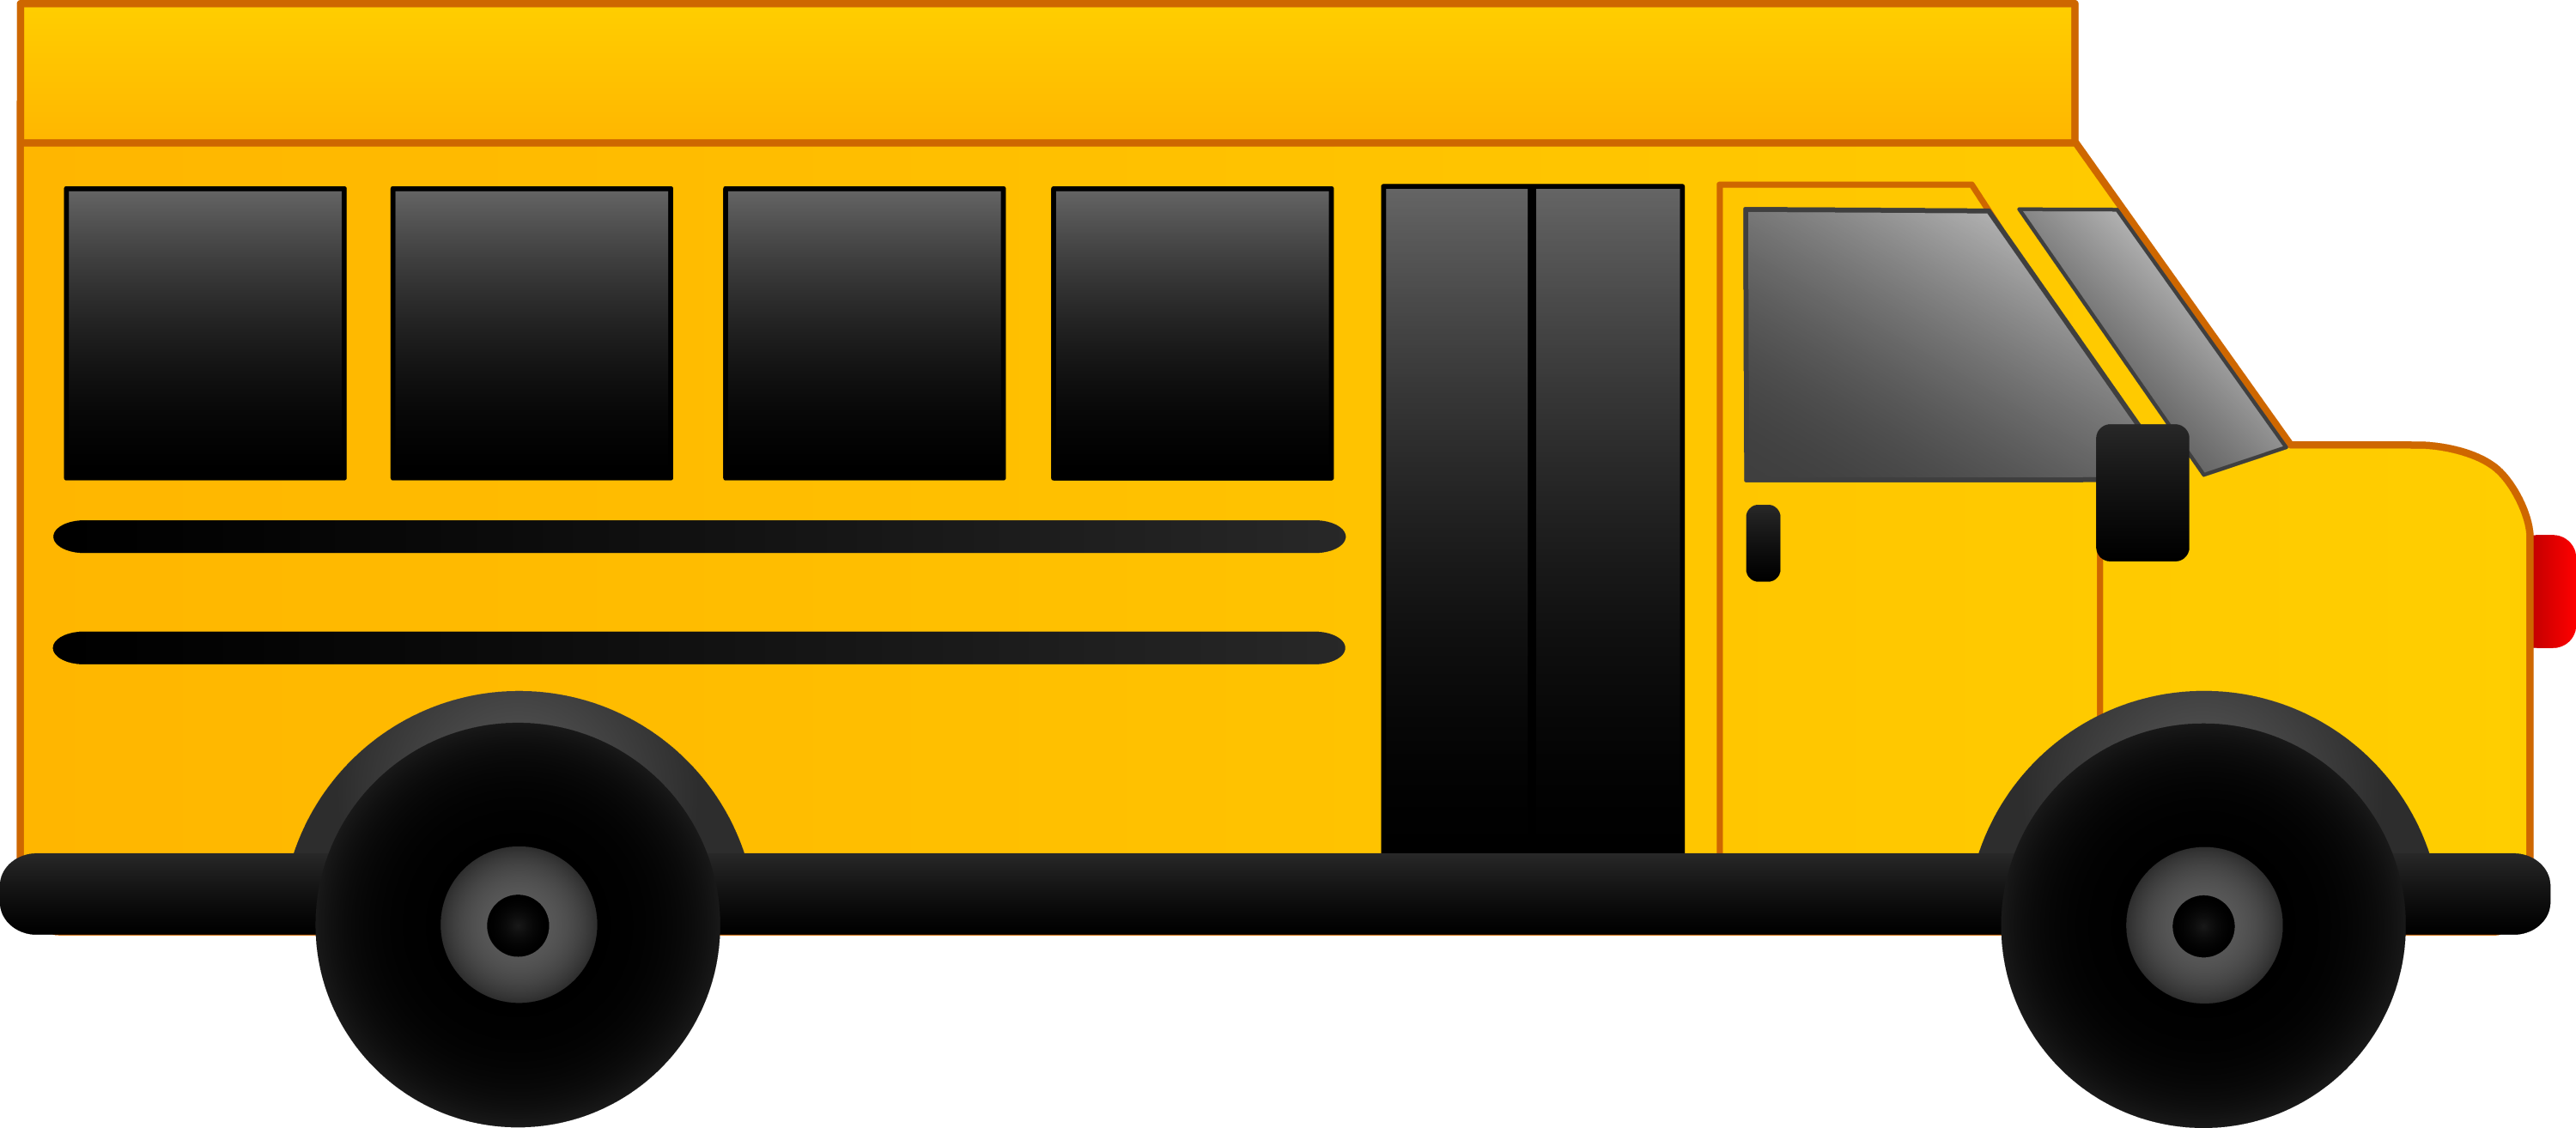 free clipart school bus - photo #30